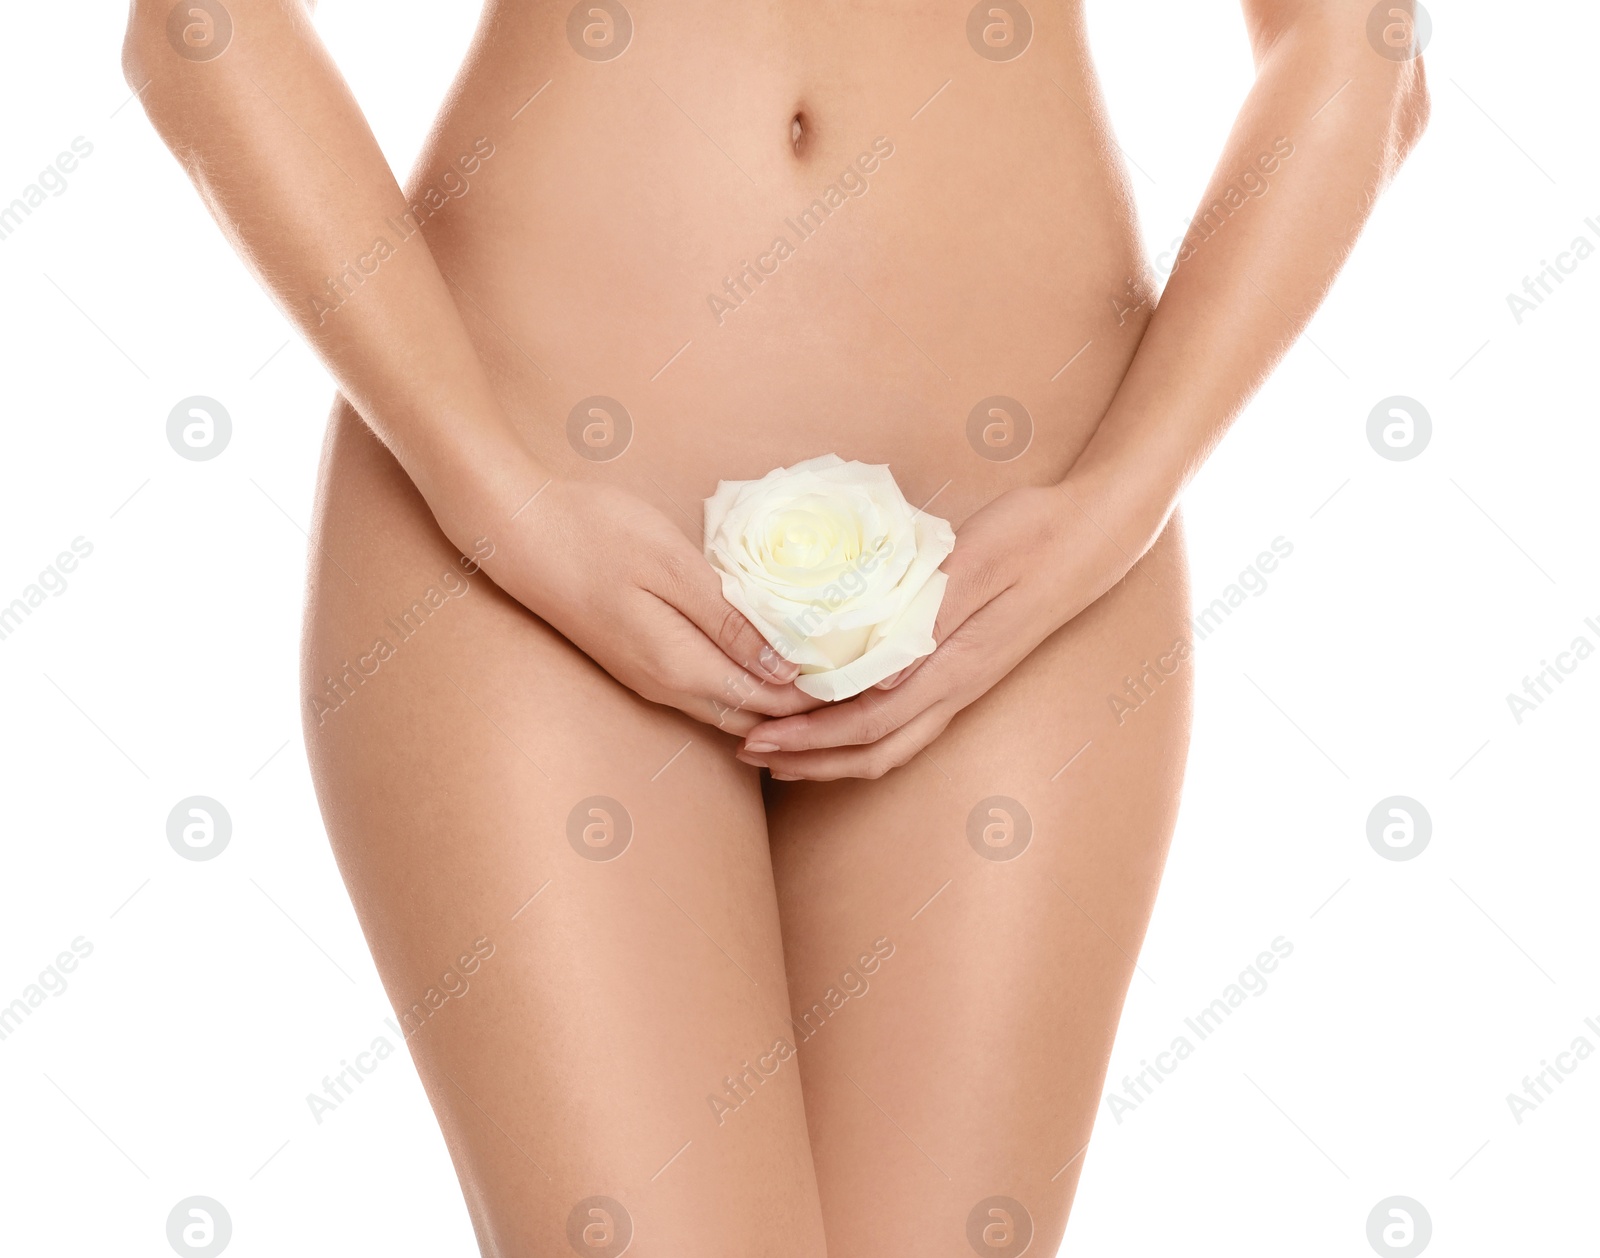 Photo of Woman with rose showing smooth skin on white background, closeup. Brazilian bikini epilation